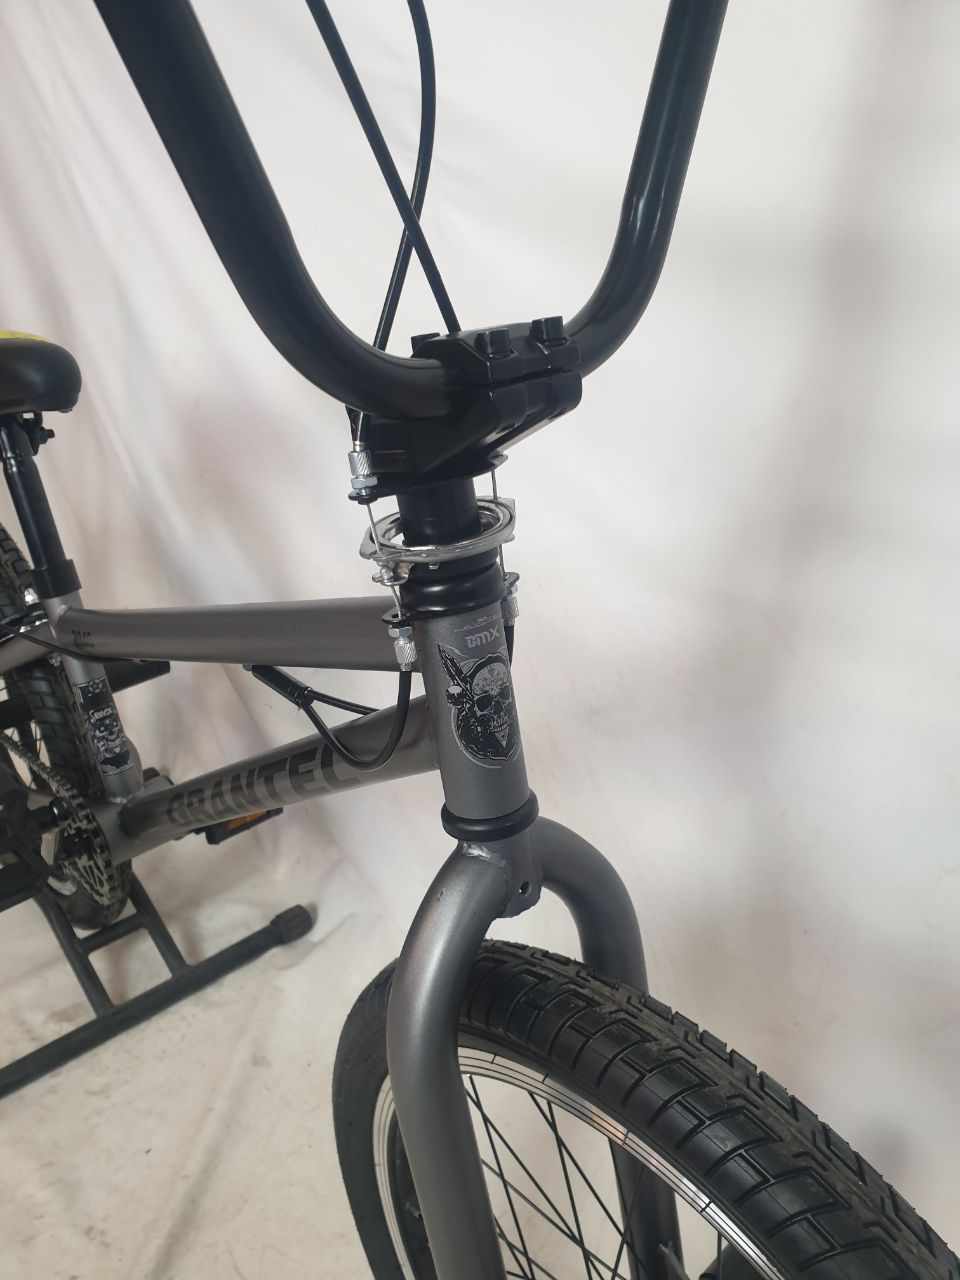 Велосипед Grantel 2040 BMX